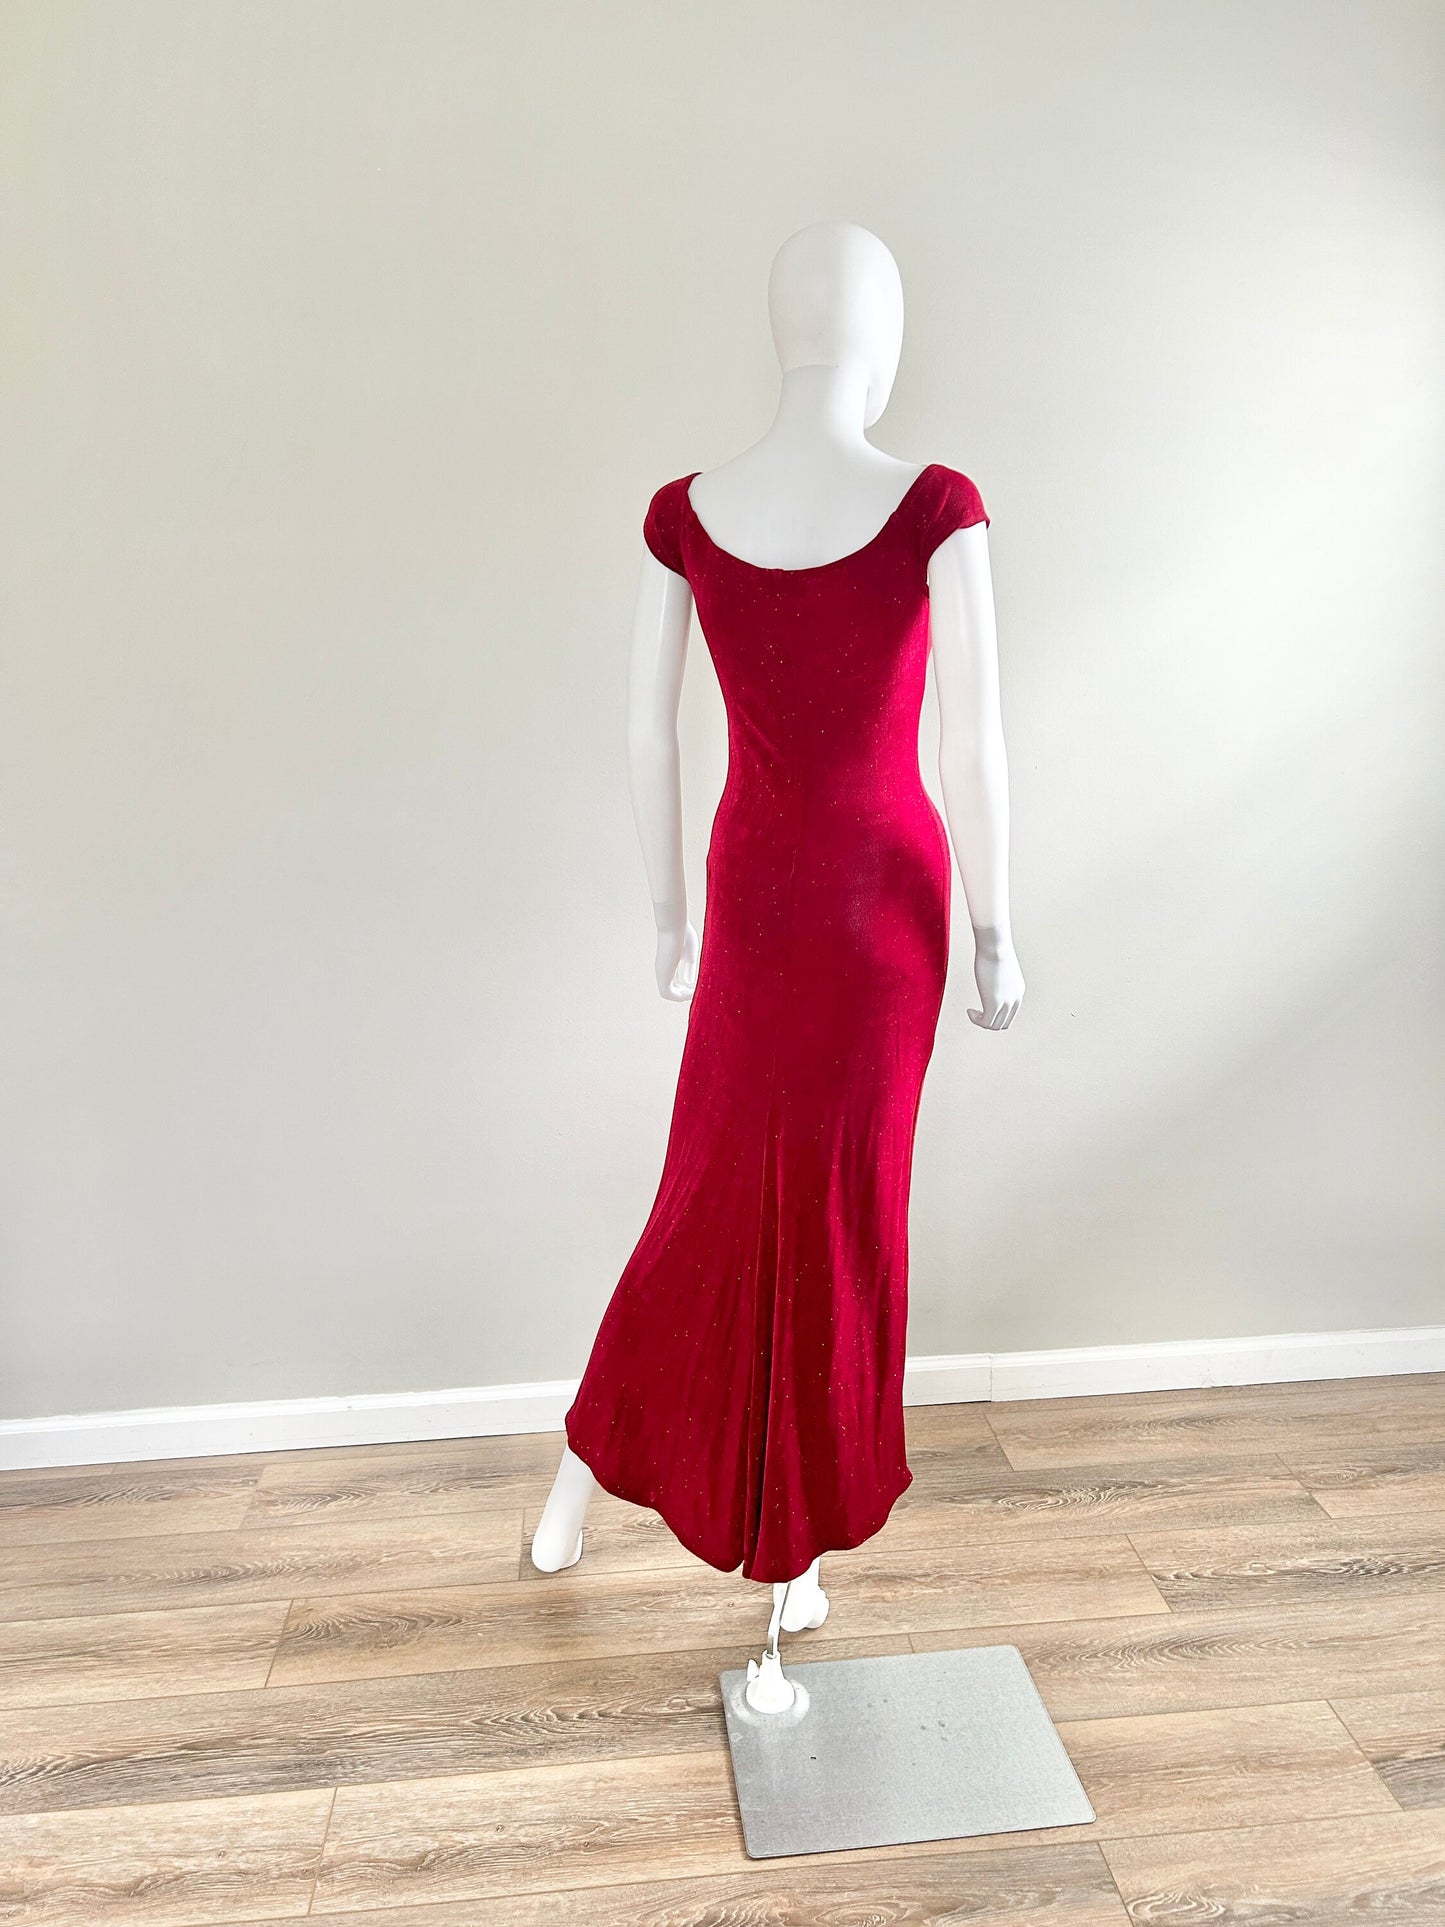 Vintage 1990s Red Body Con Formal Dress / 90s Jessica McClintock for Gunne Sax dress / Size XS S